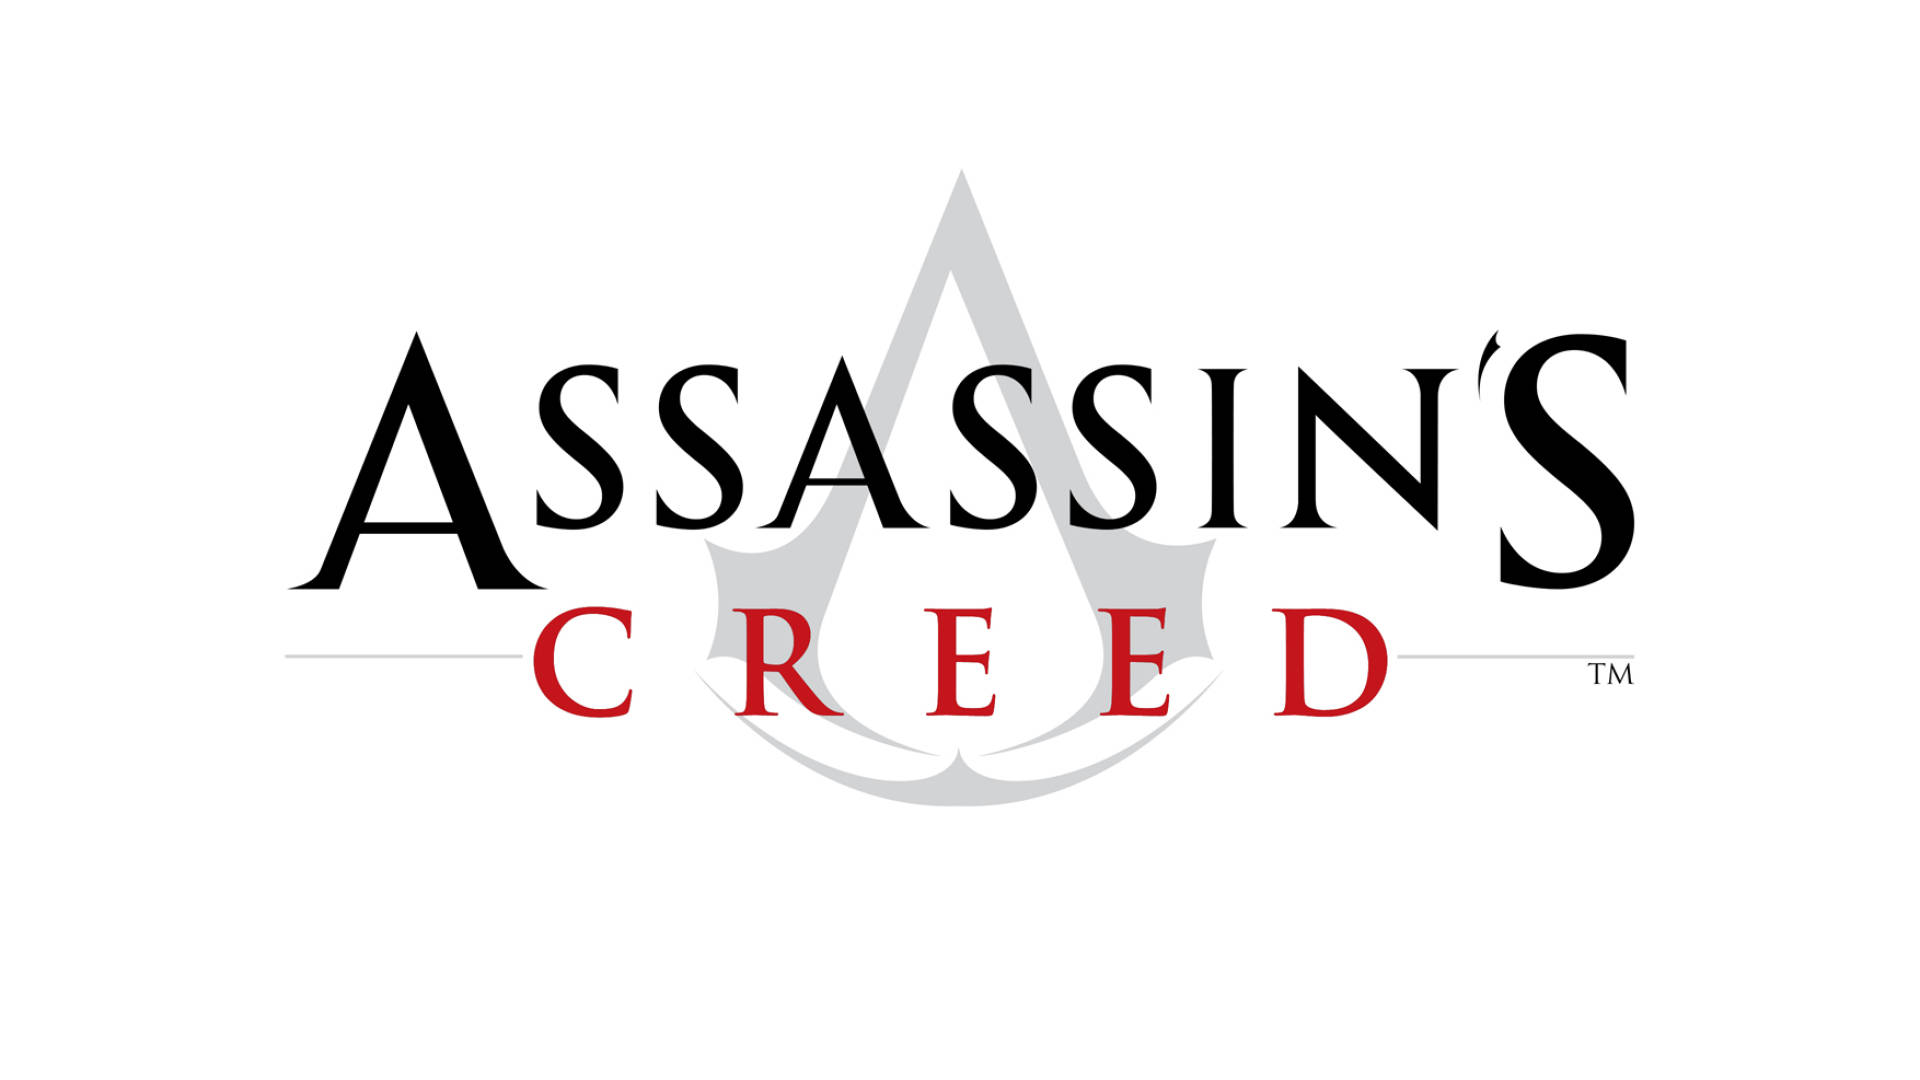 Assassin's Creed Game Logo Wallpaper